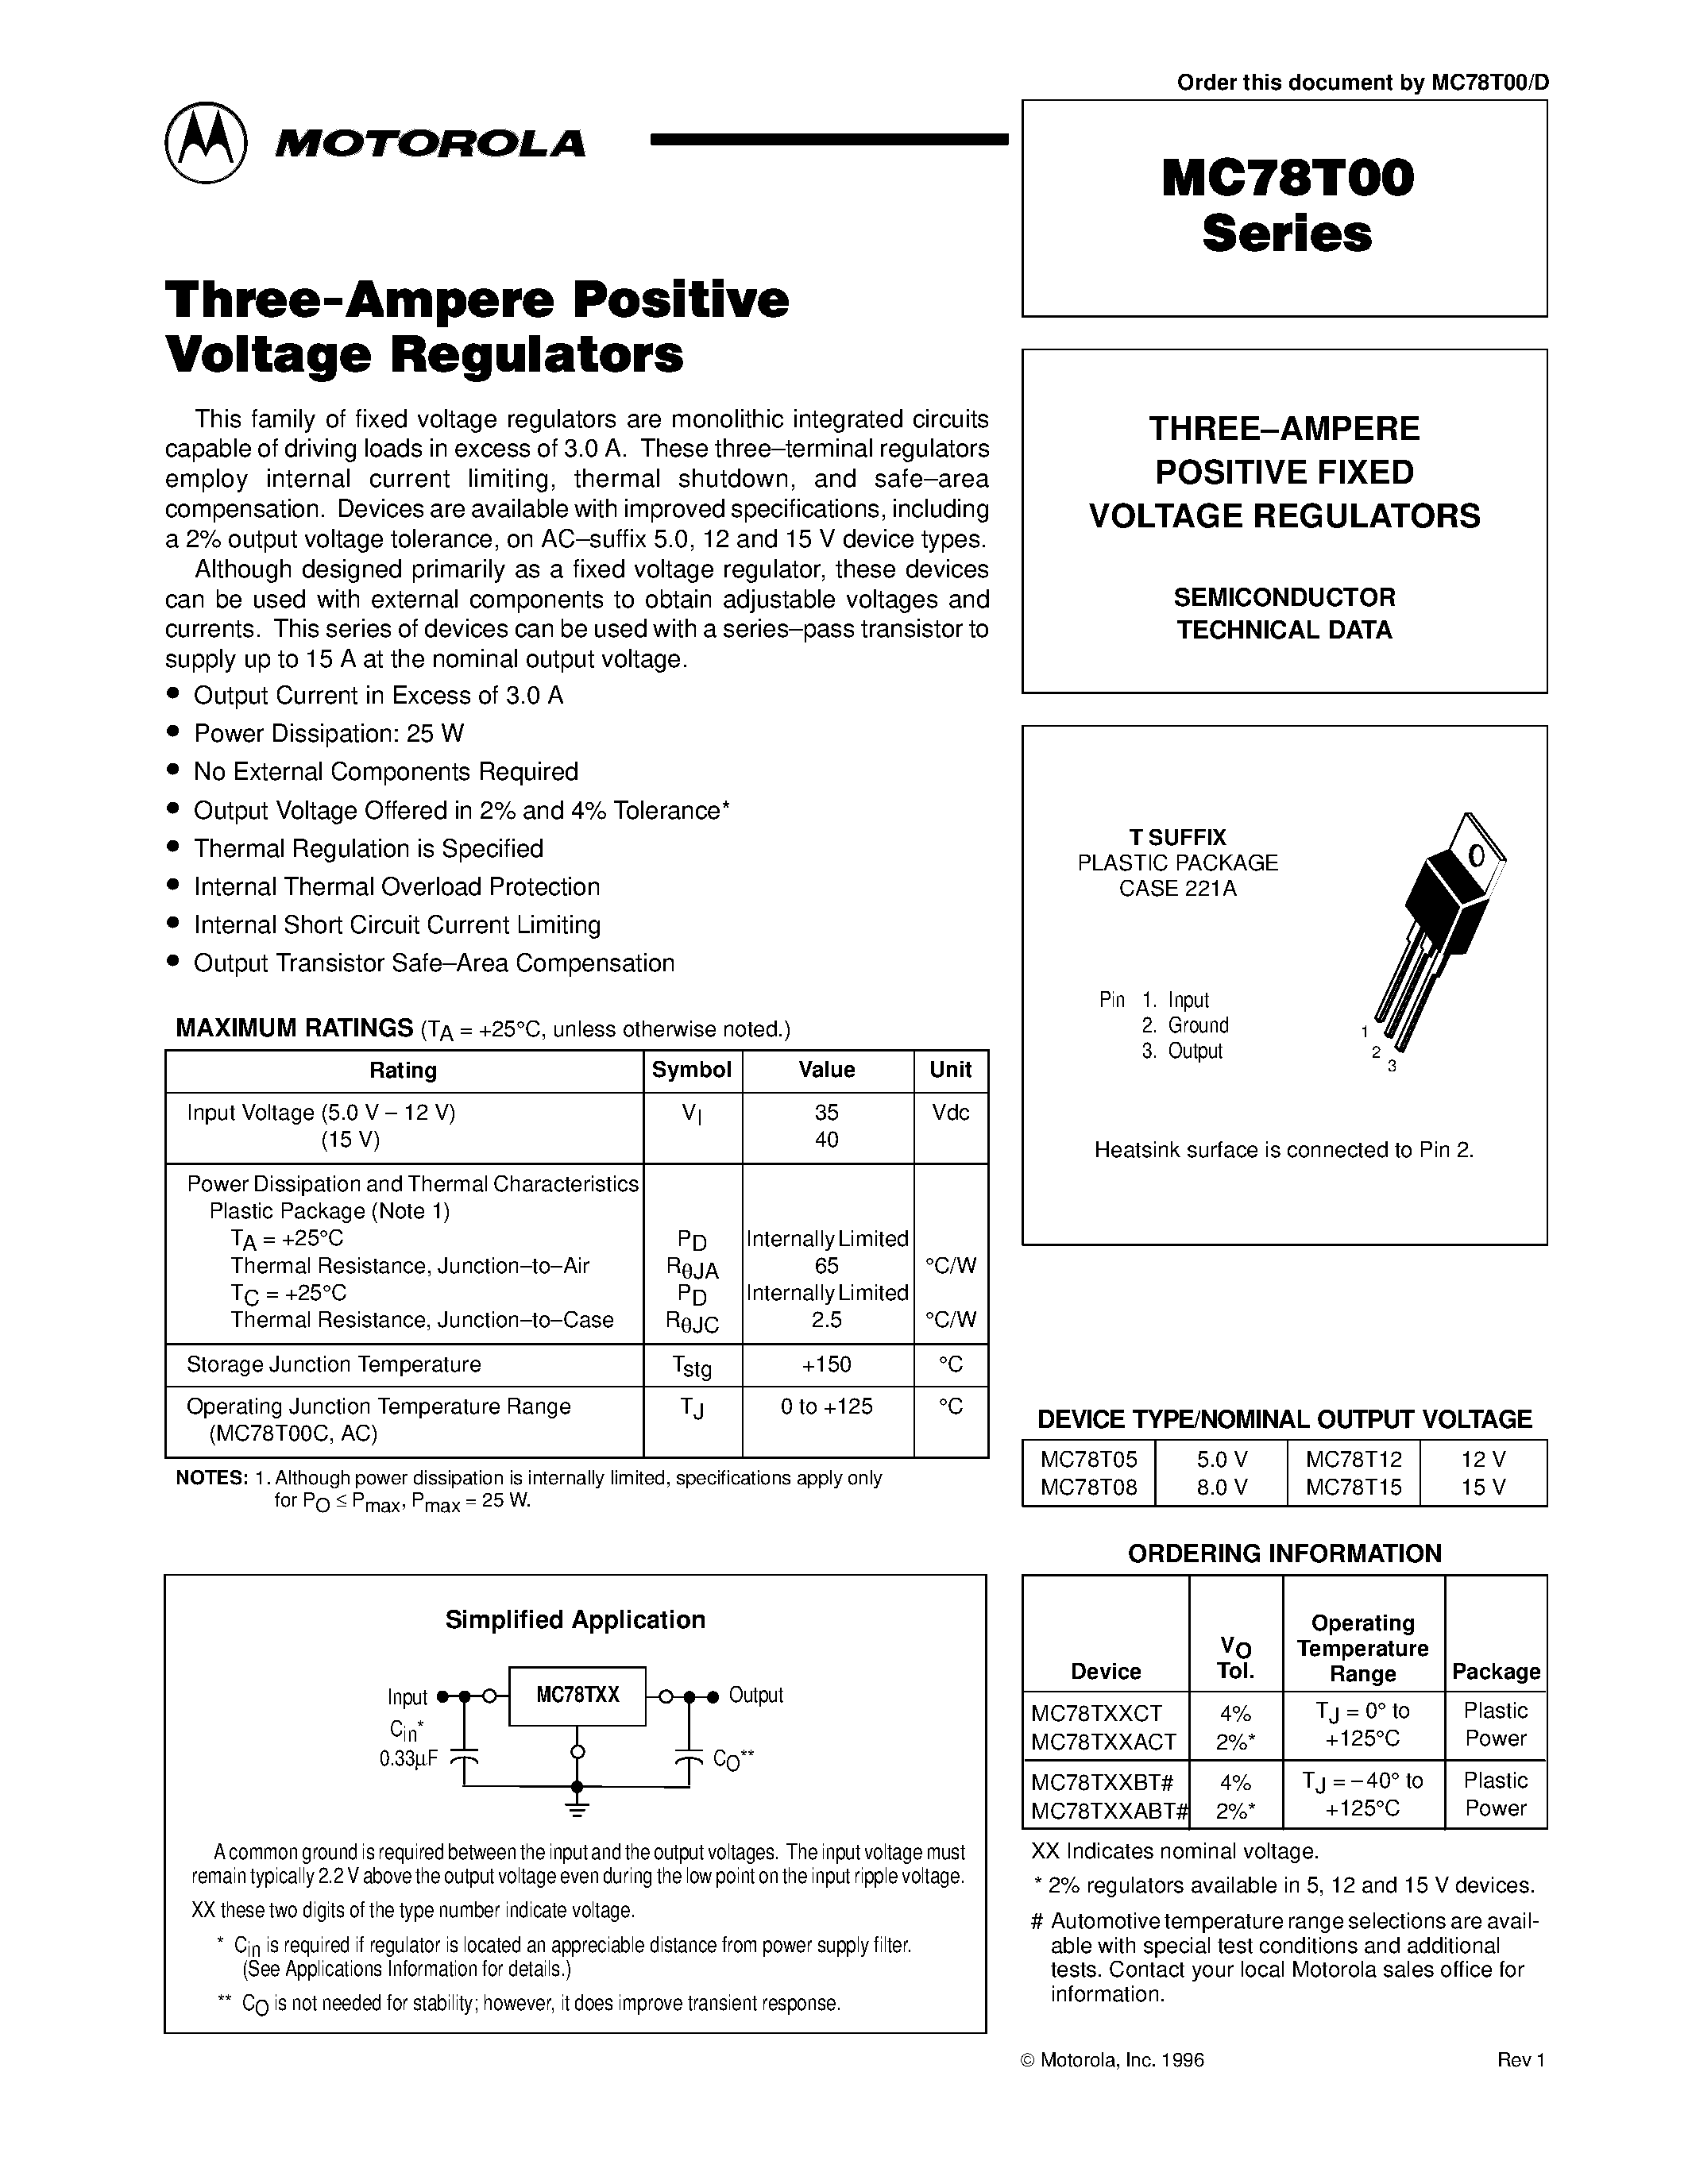 Datasheet MC78T08ABT - THREE-AMPERE POSITIVE FIXED VOLTAGE REGULATORS page 1